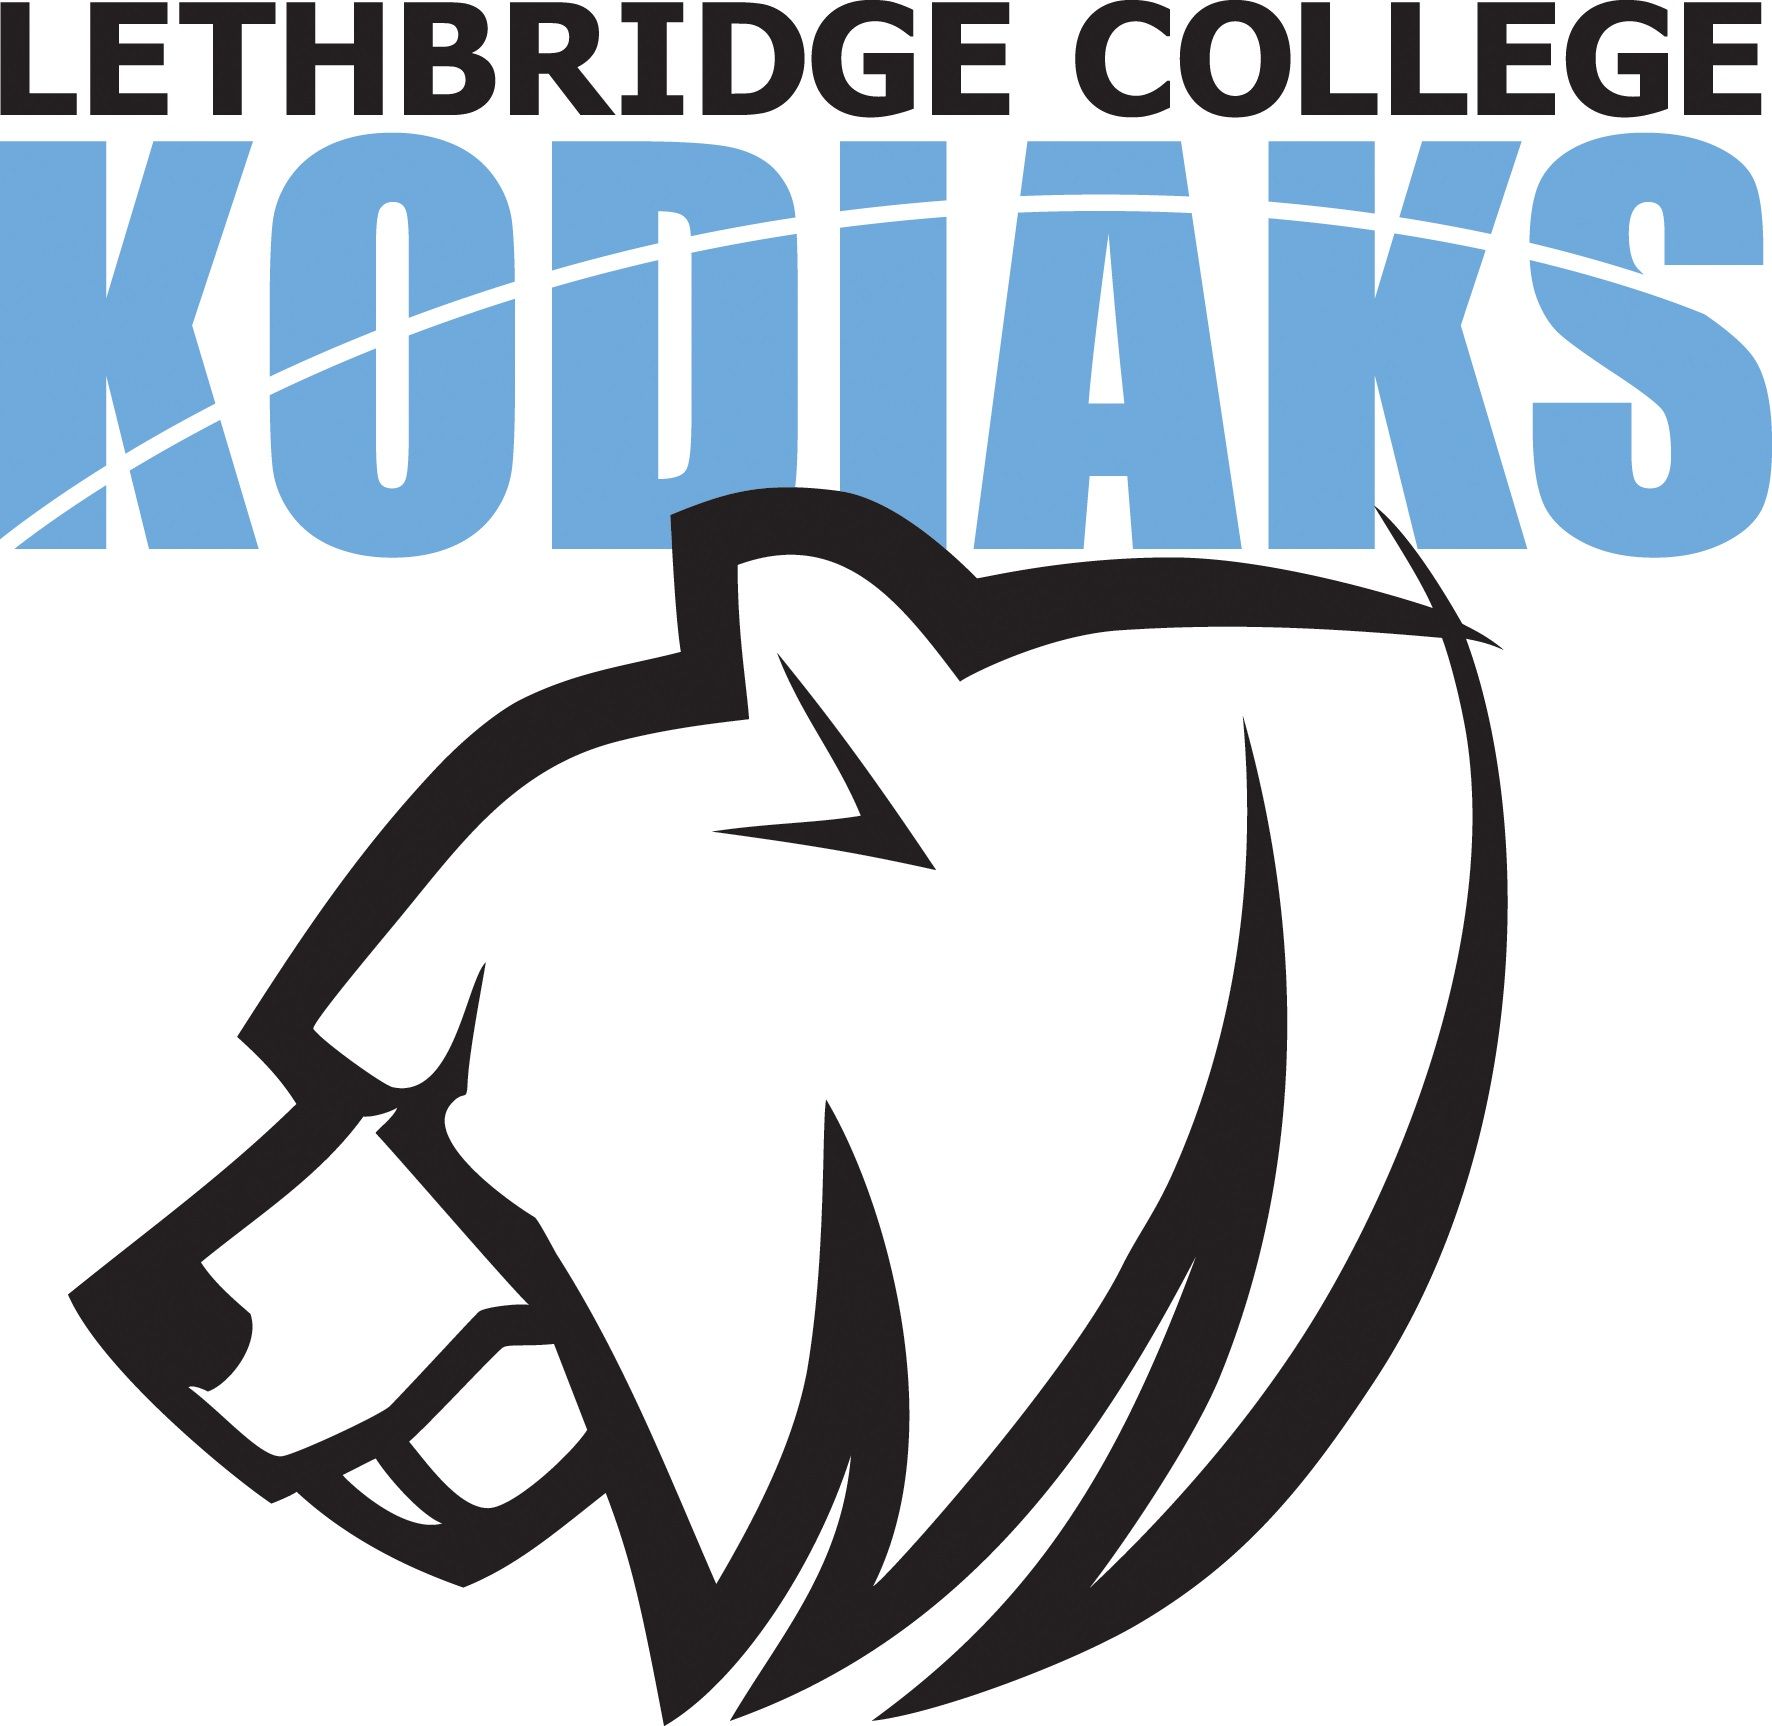 Lethbridge College Kodiaks logo